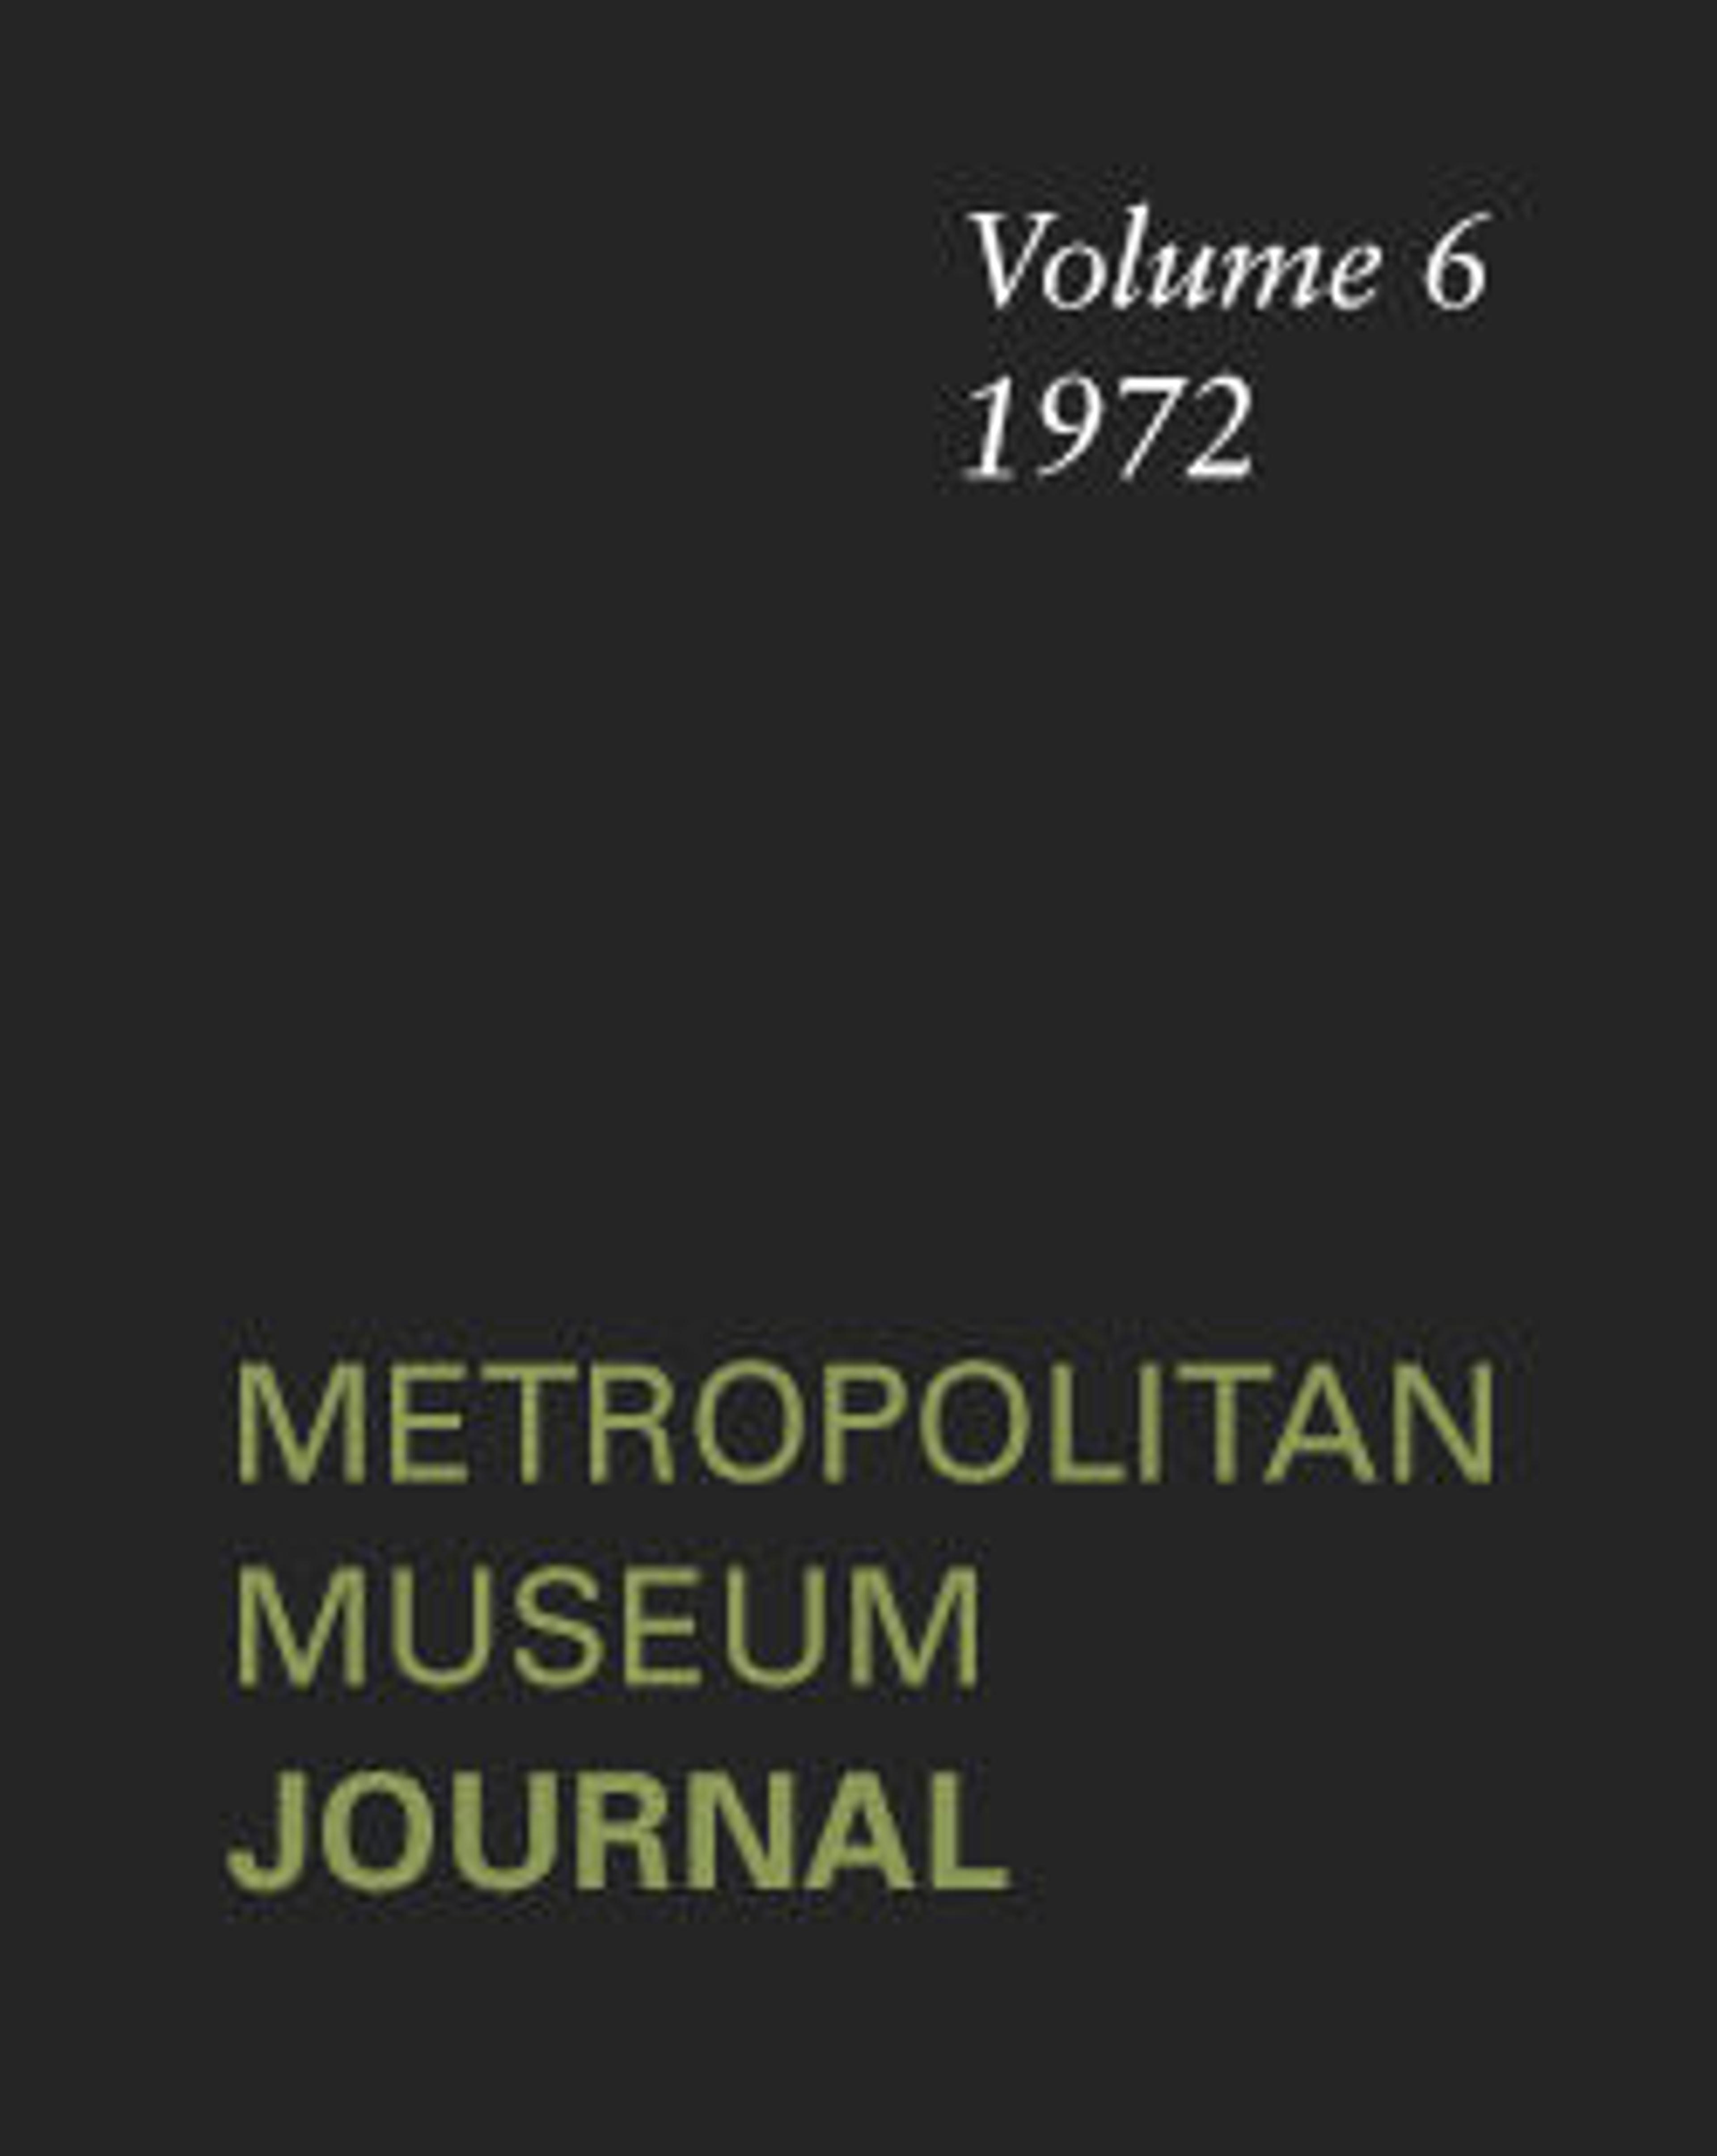 The Metropolitan Museum Journal, v. 6 (1972)